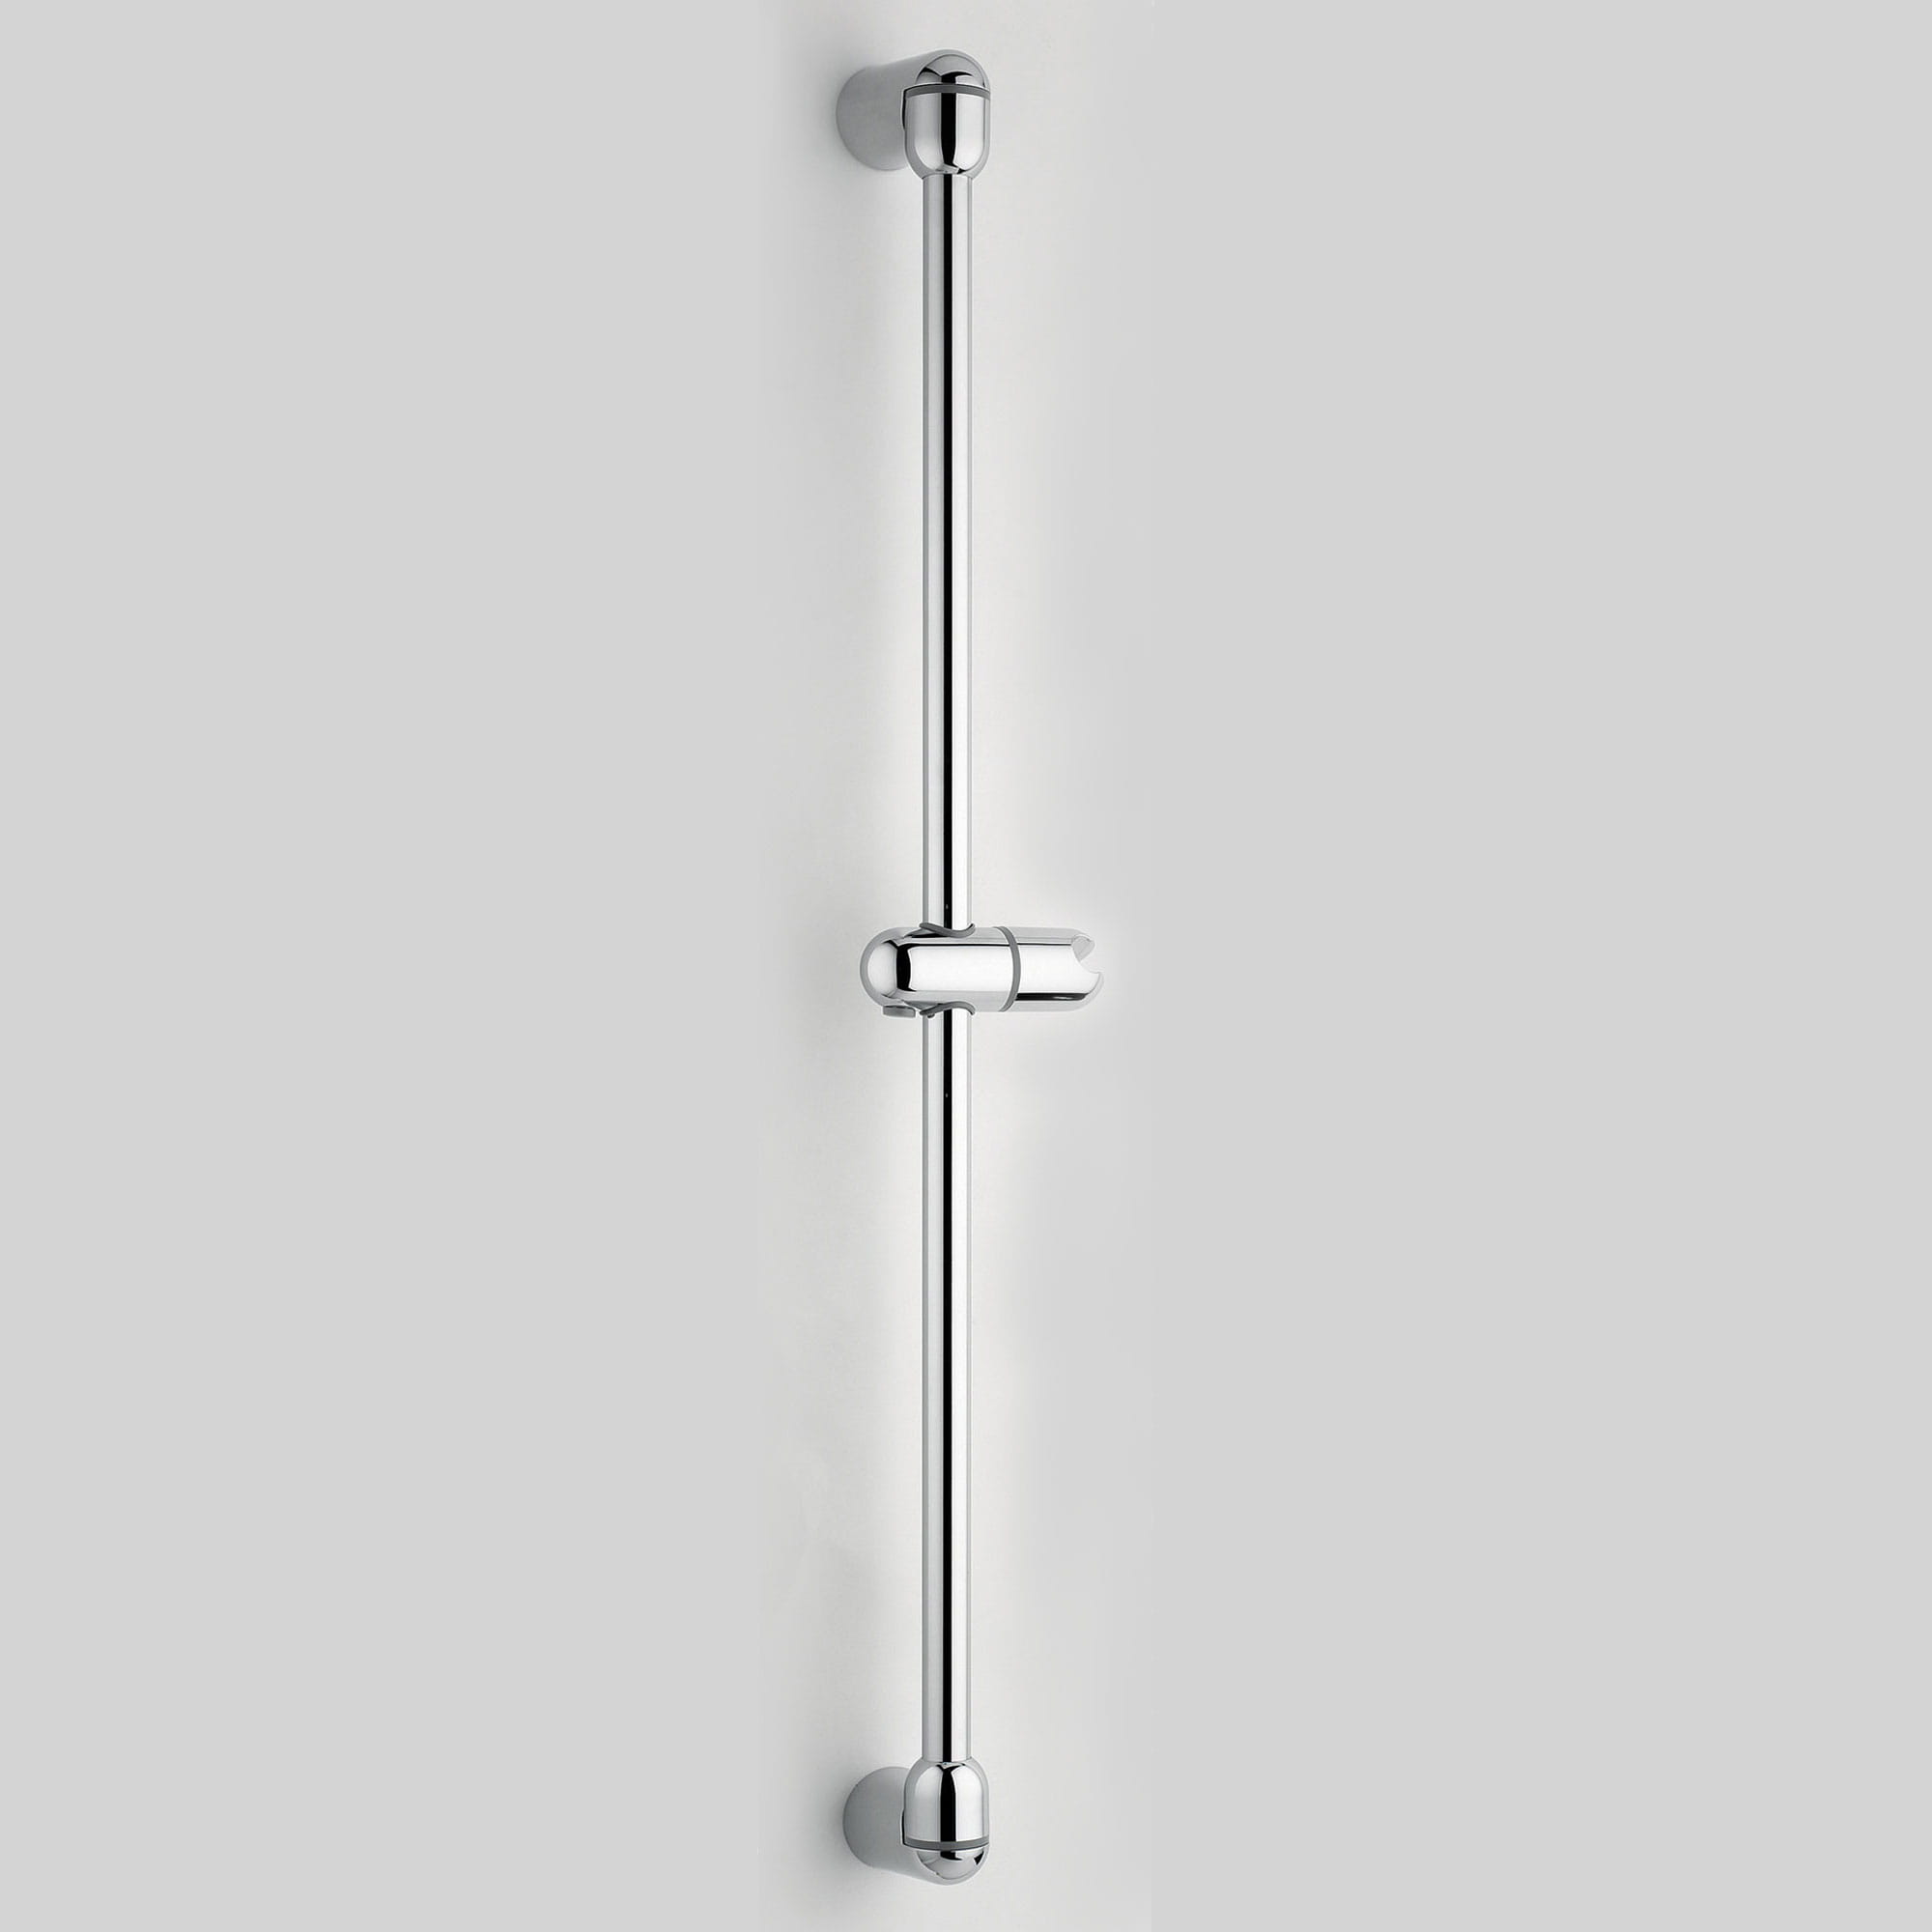 Standard 24-Inch Shower Slide Bar